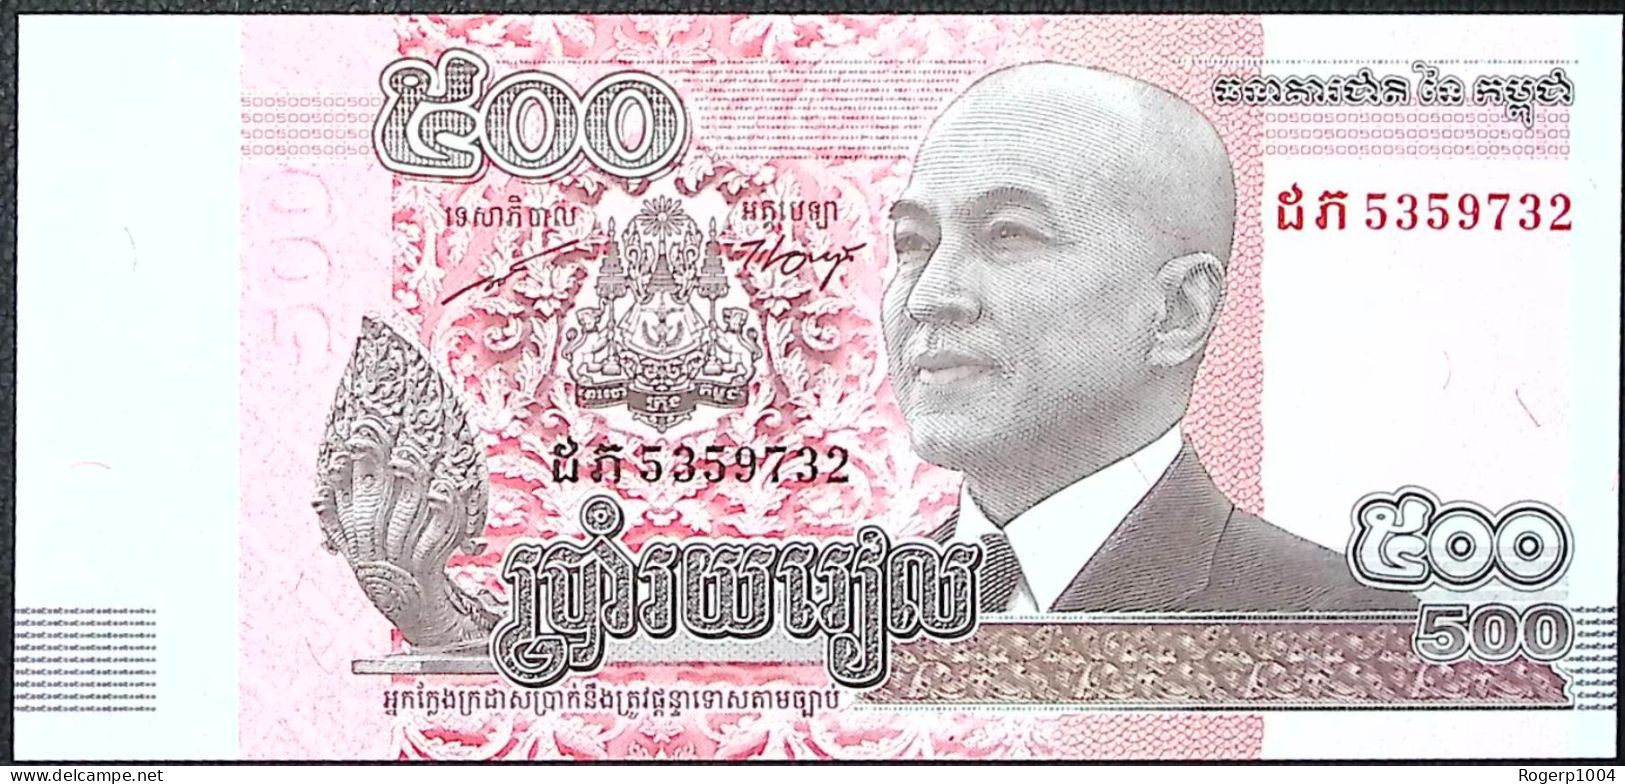 CAMBODGE/CAMBODIA * 500 Riels * Date 2014 * Etat/Grade NEUF/UNC * - Cambodia